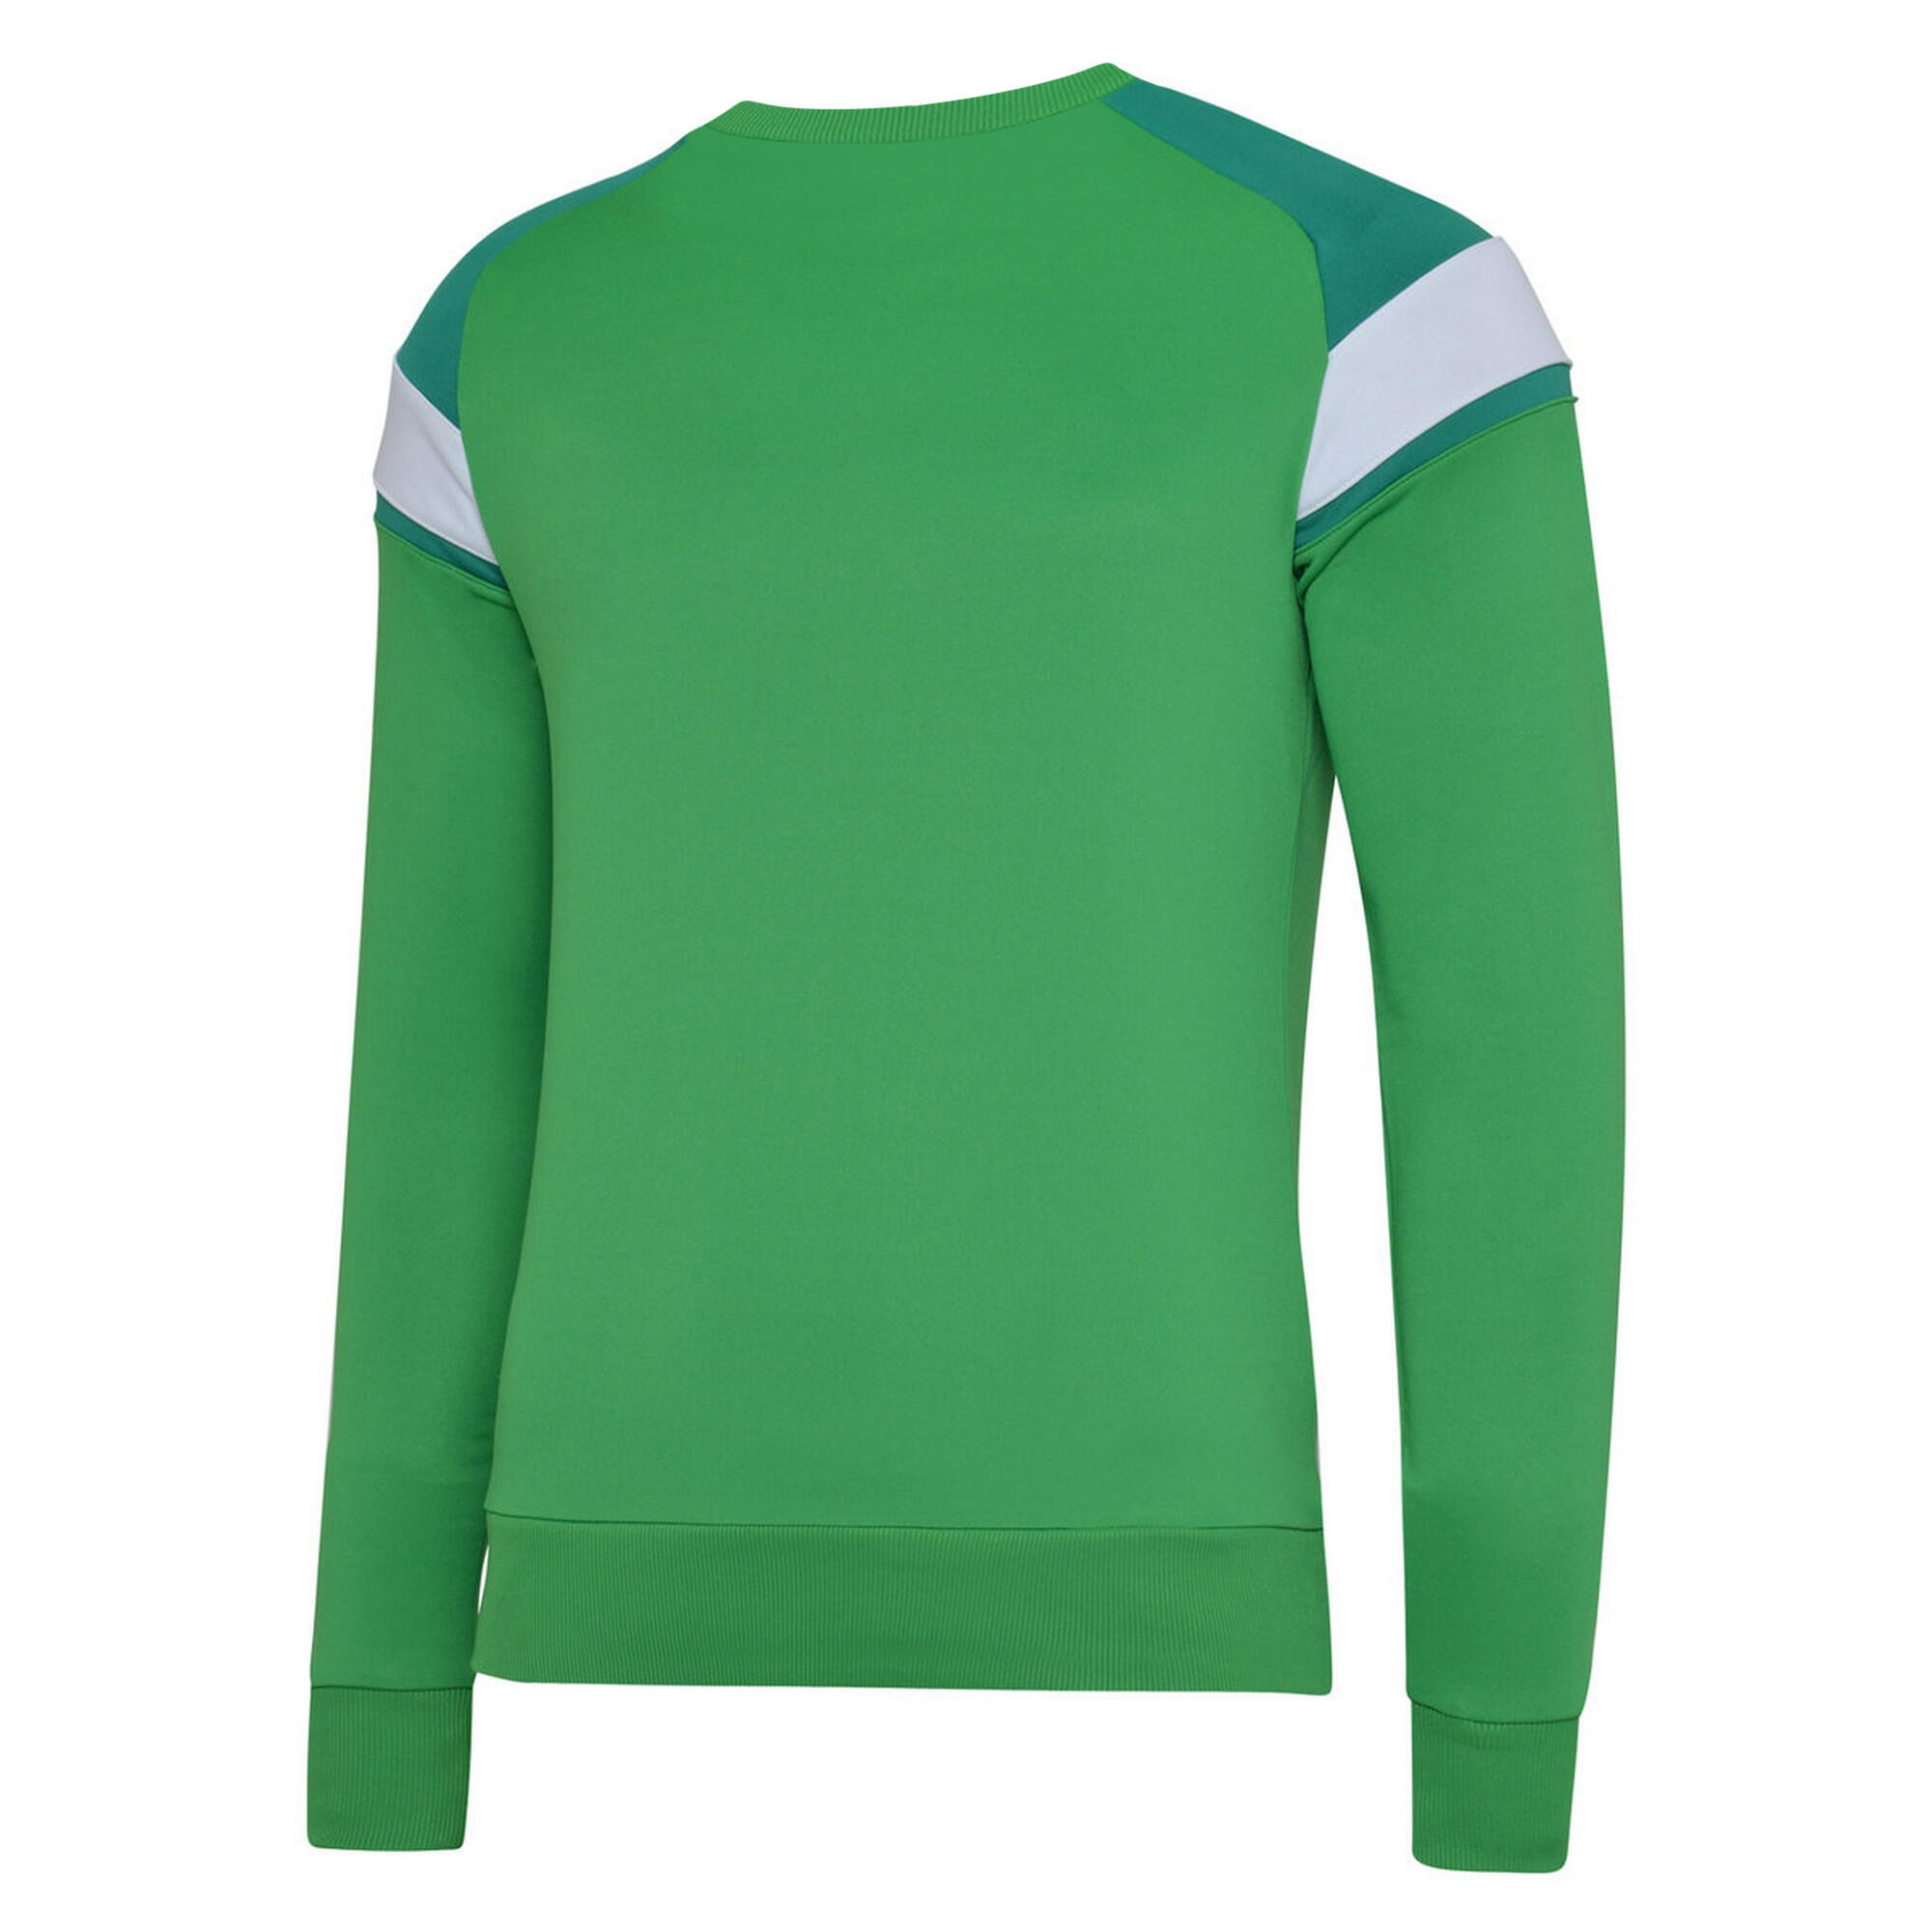 Childrens/Kids Fleece Sweatshirt (Emerald/Lush Meadows/Brilliant White) 2/3